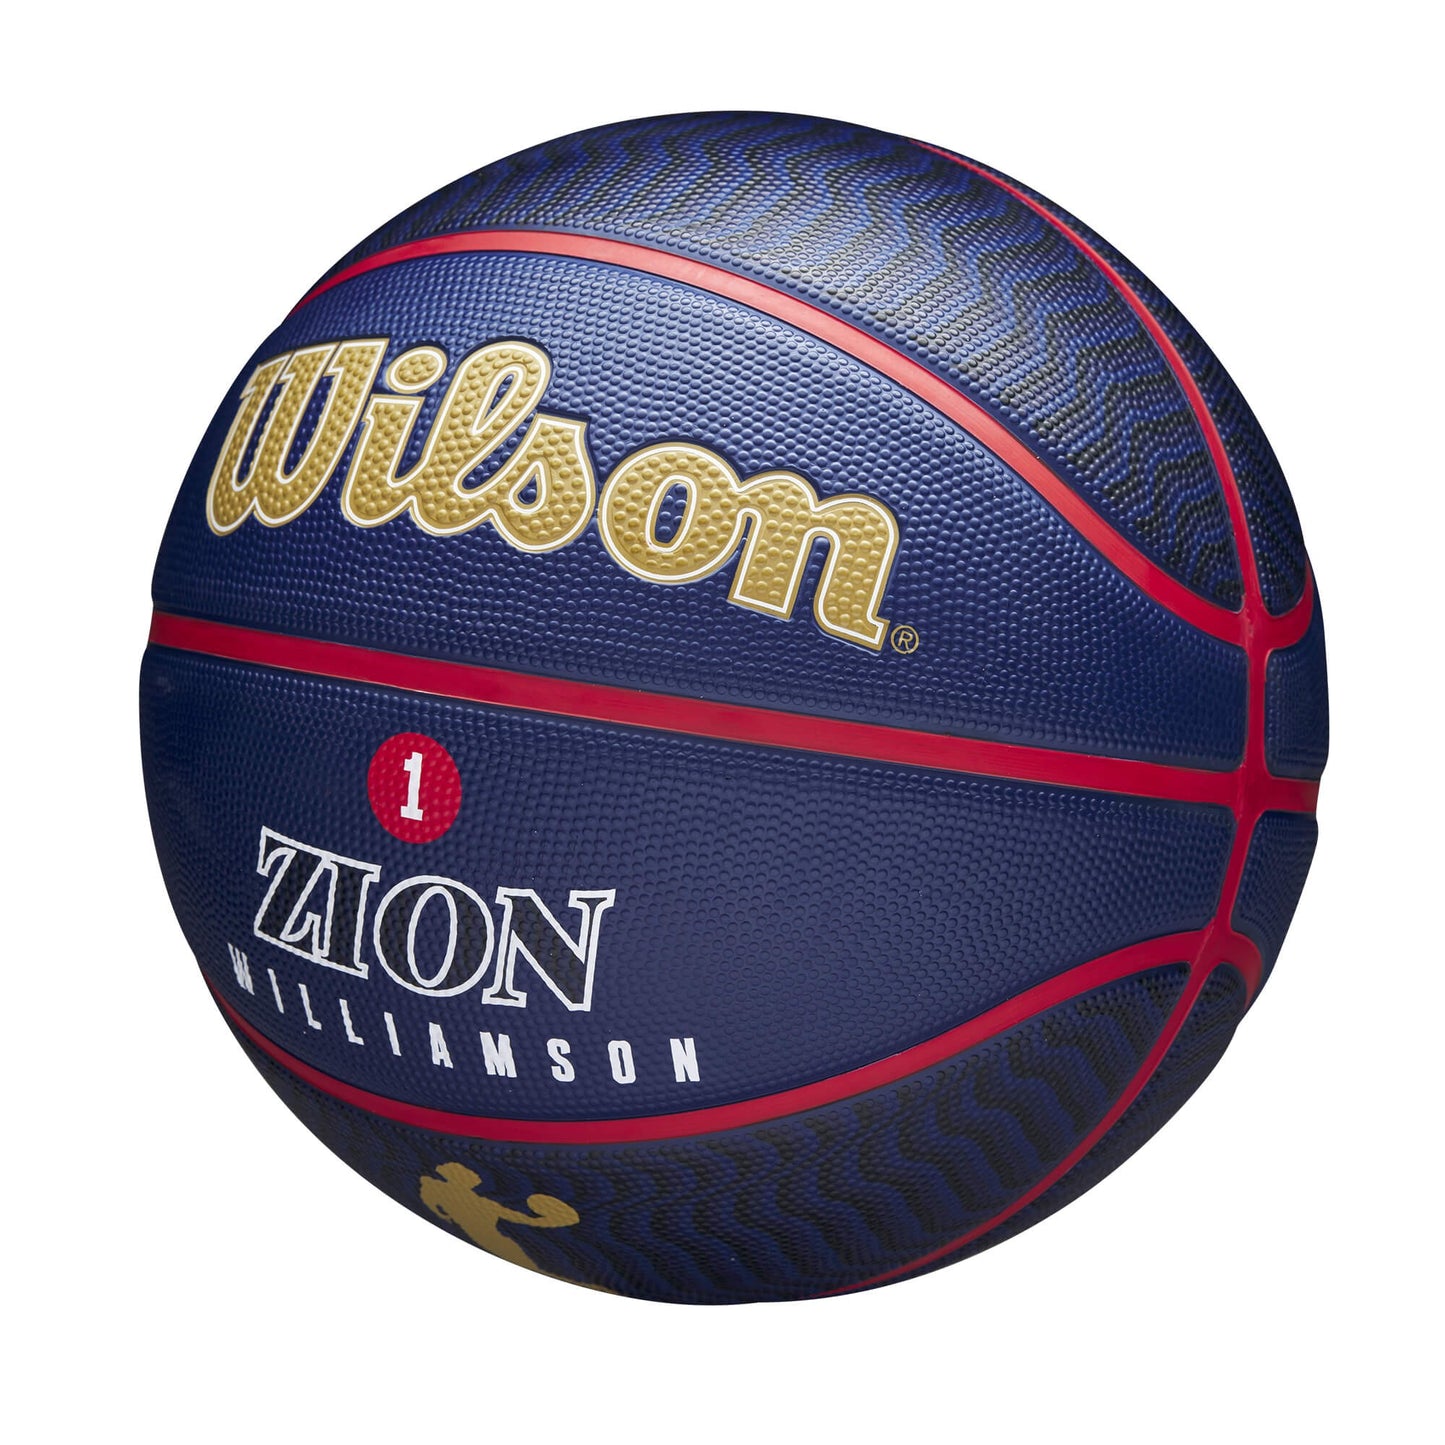 WILSON NBA PLAYER ICON OUTDOOR BSKT ZION Navy (sz. 7)